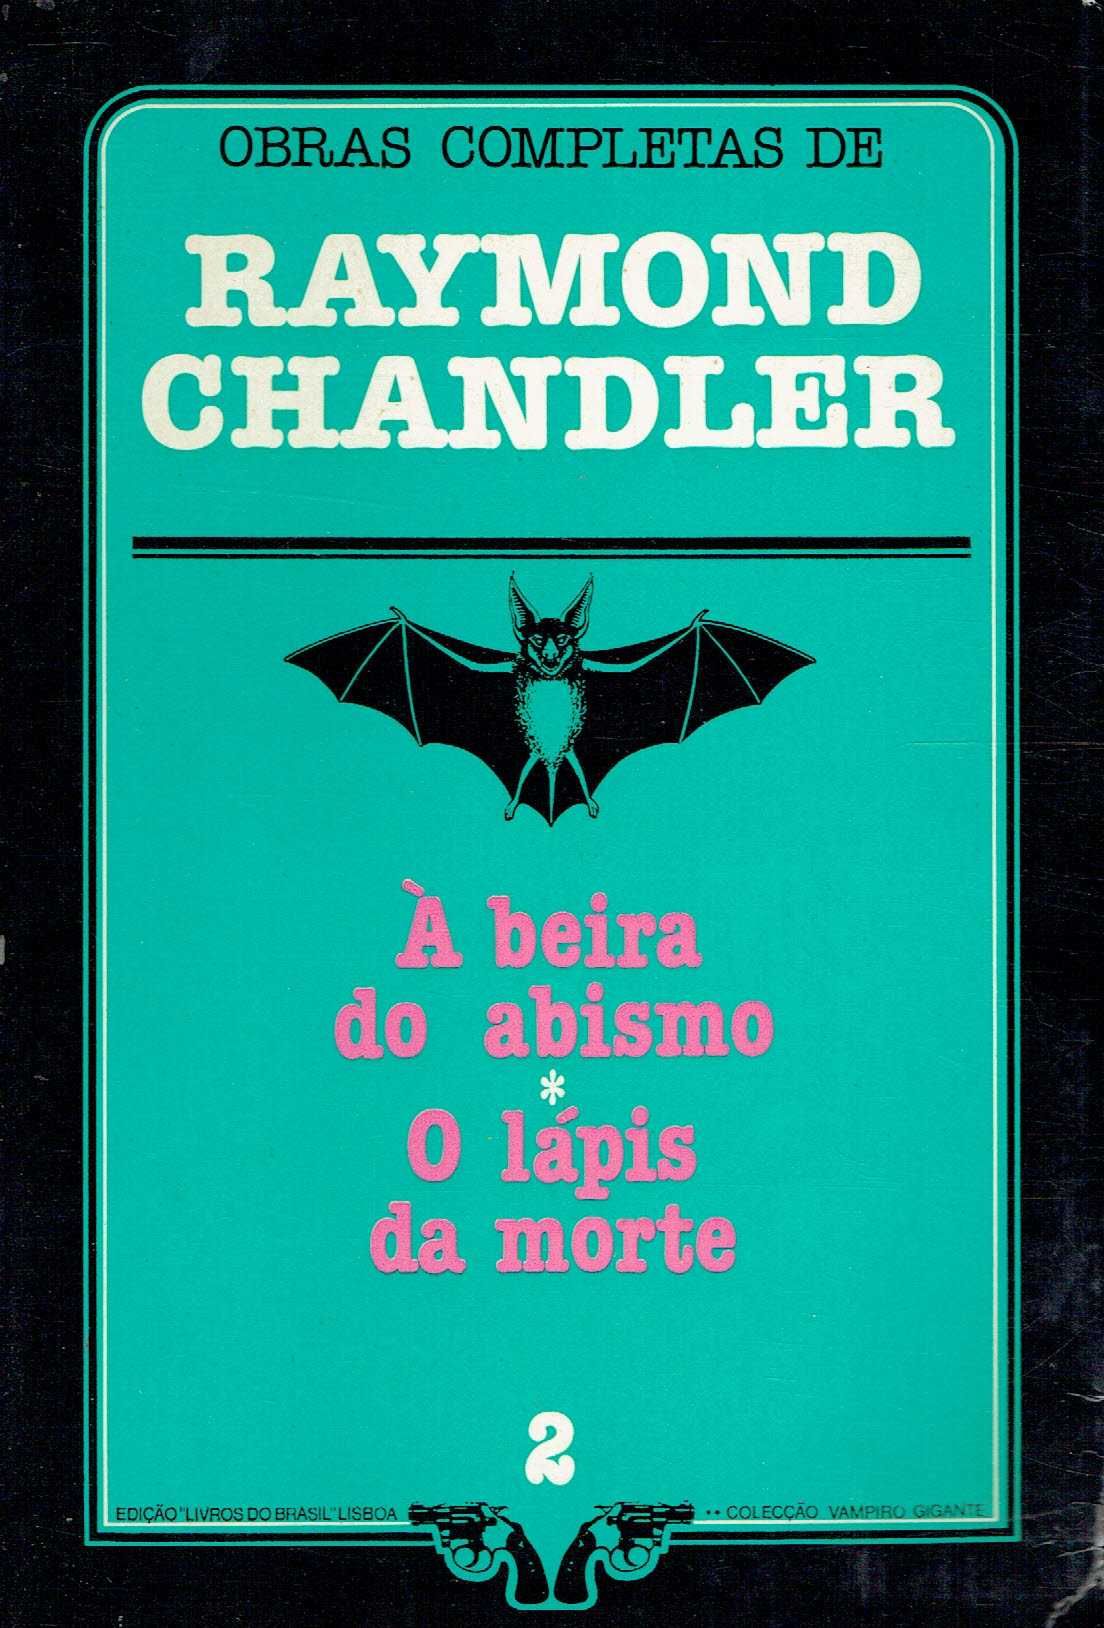 14675

Obras Completas de Raymond Chandler